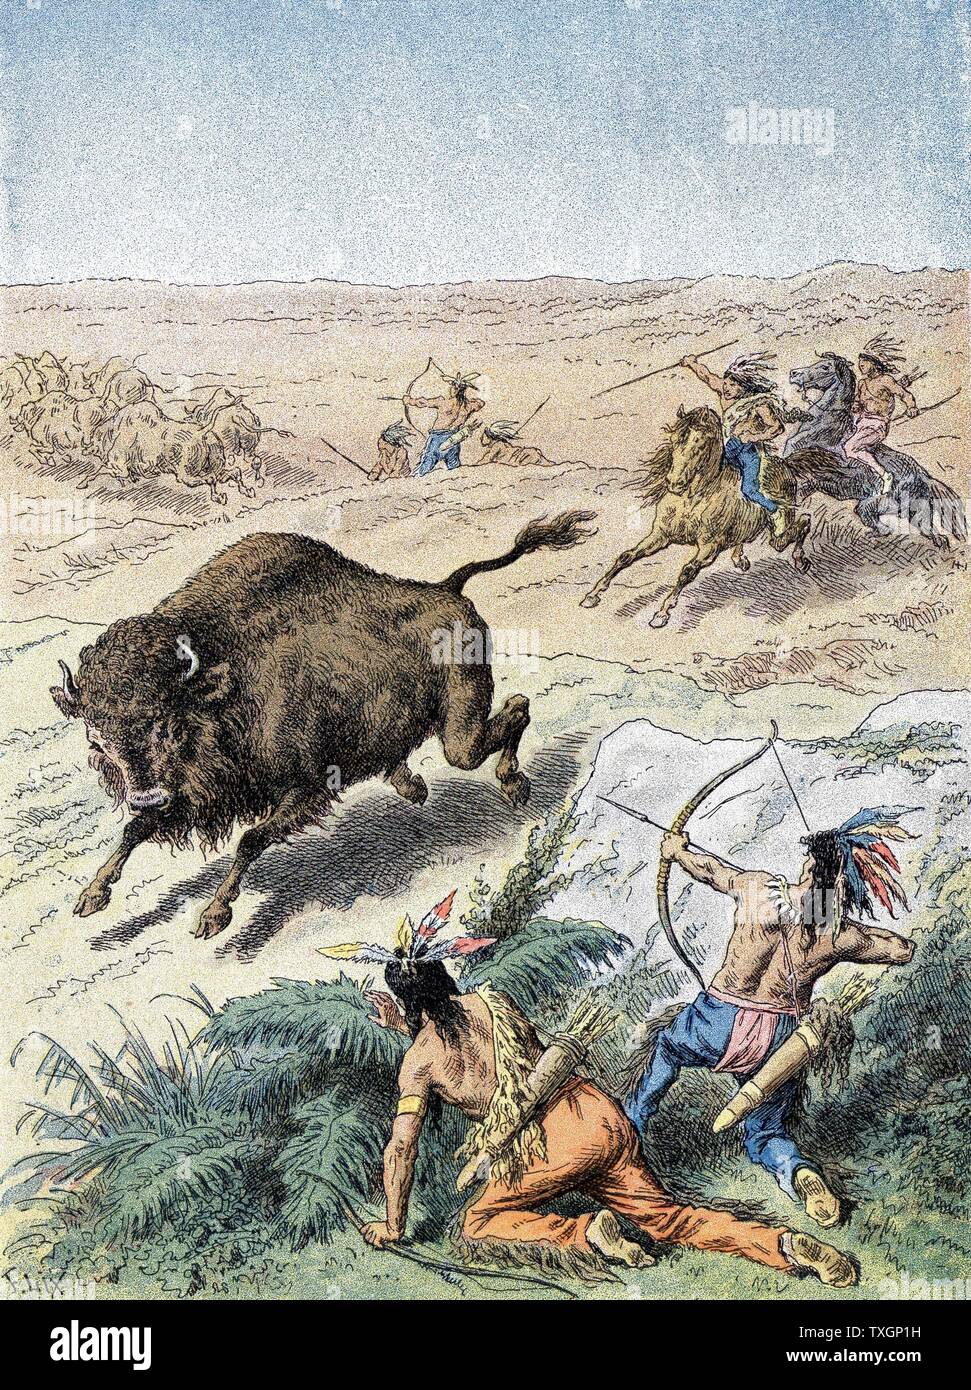 Buffalo Hunting Stock Illustration - Download Image Now